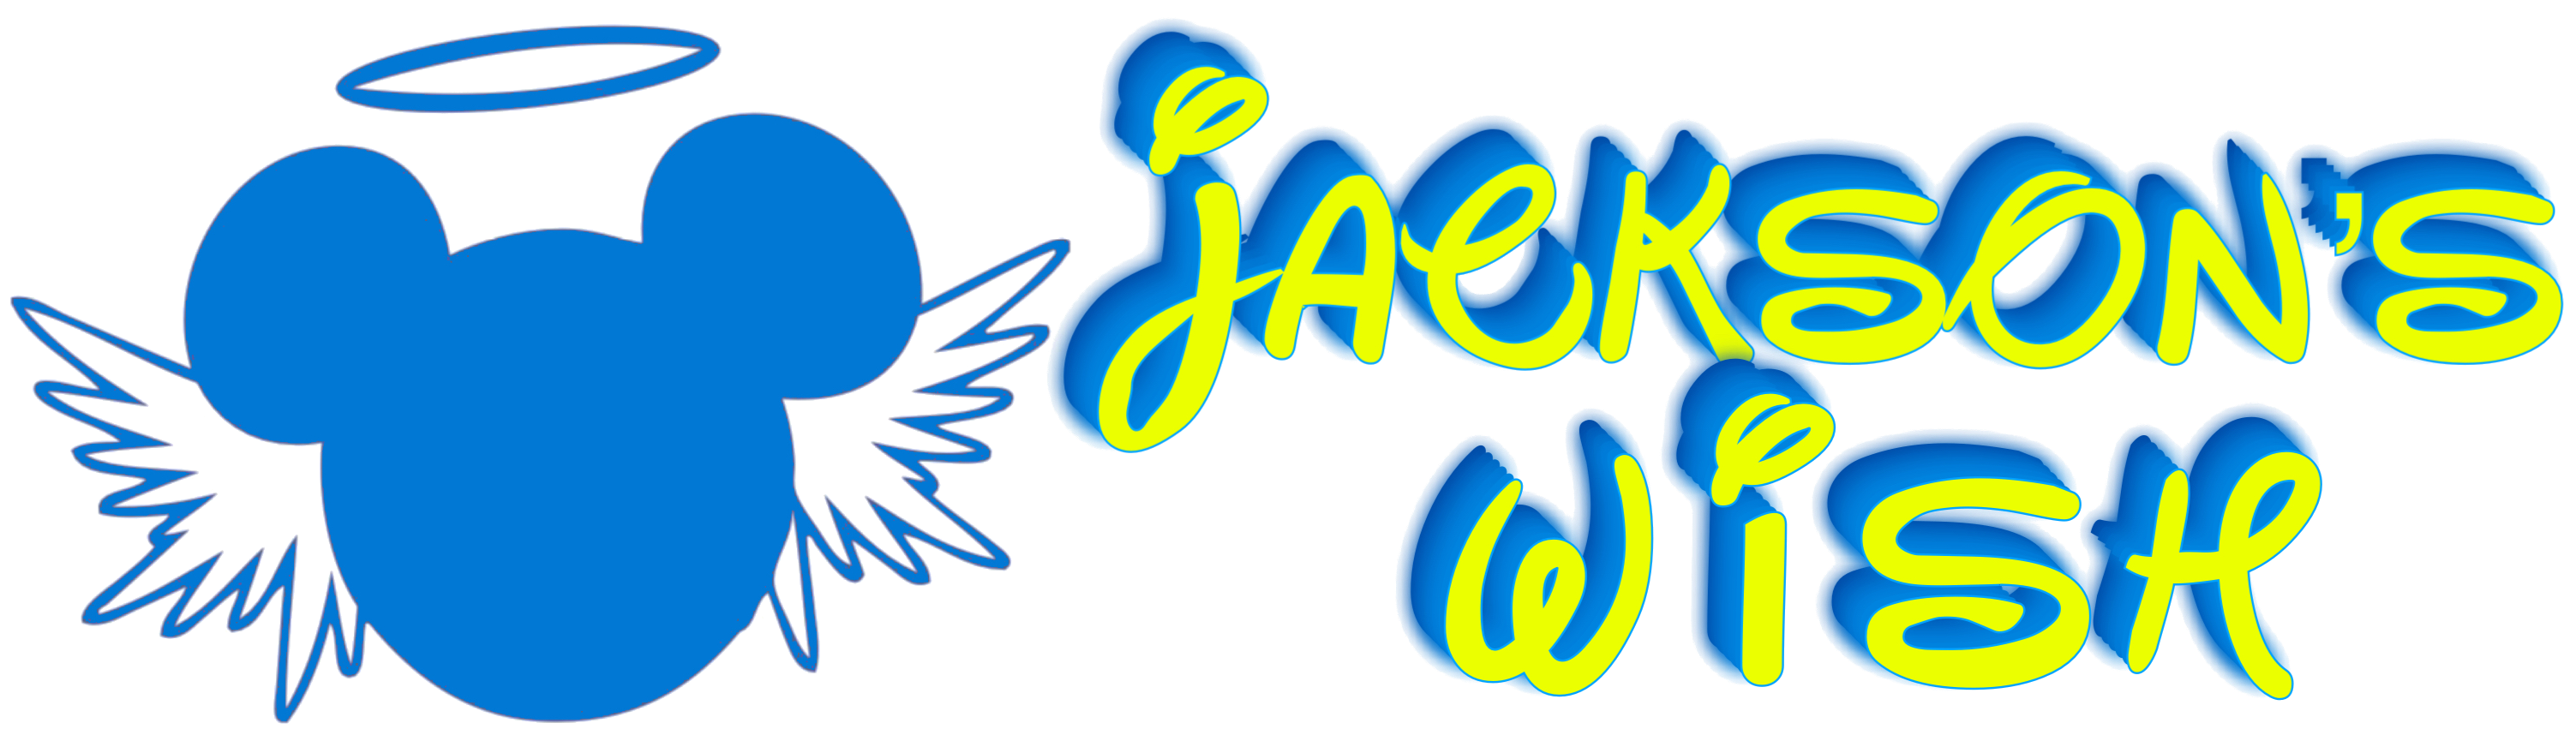 Jackson's Wish